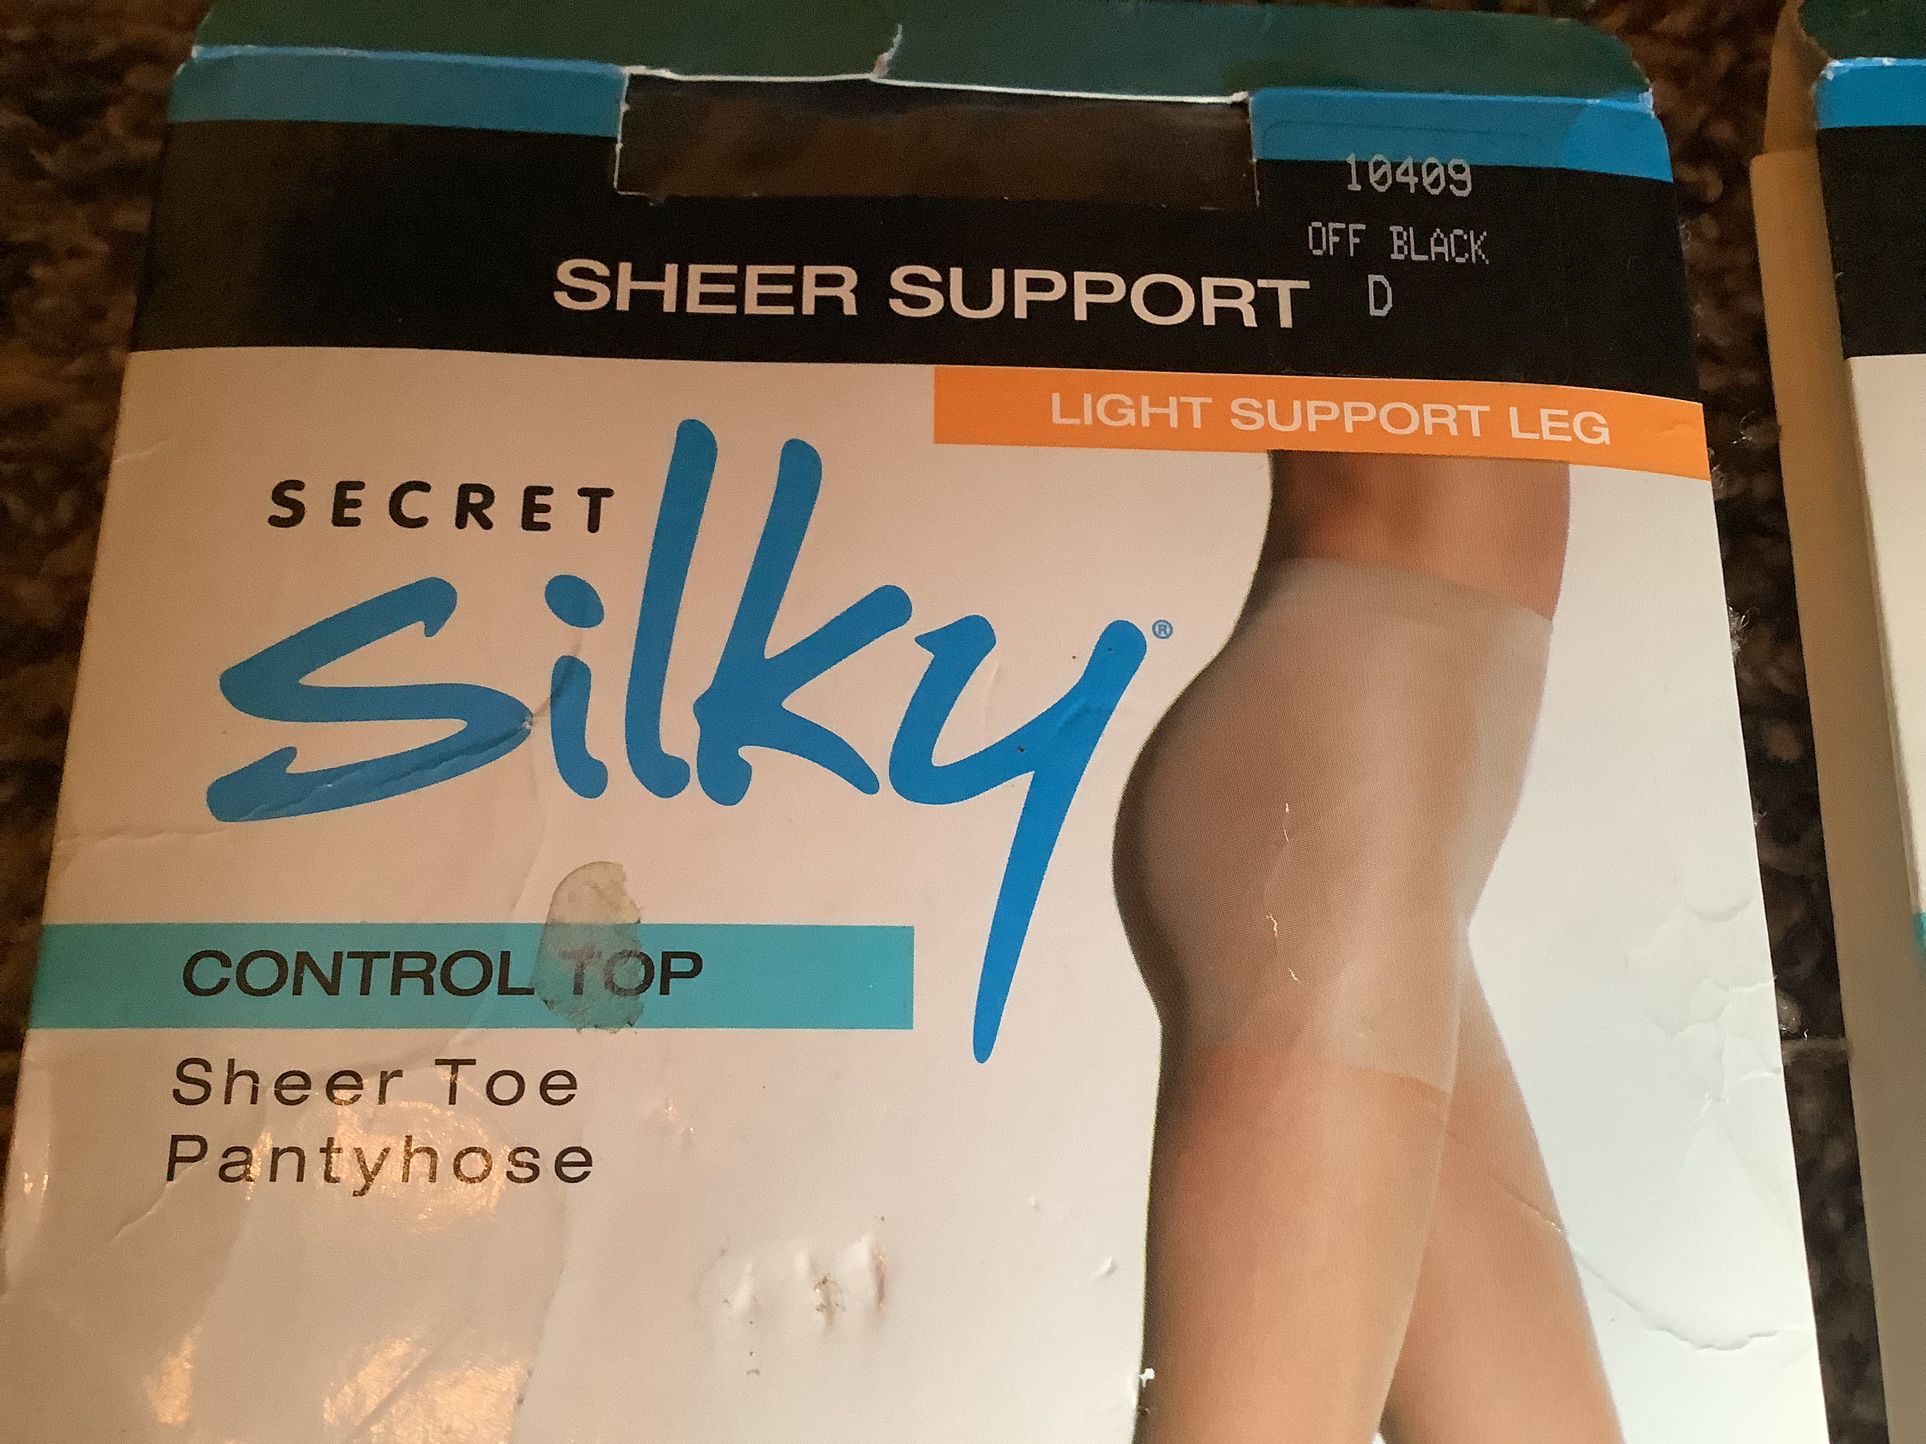 Lot of 2 - Secret Silky control top pantyhose, color off black